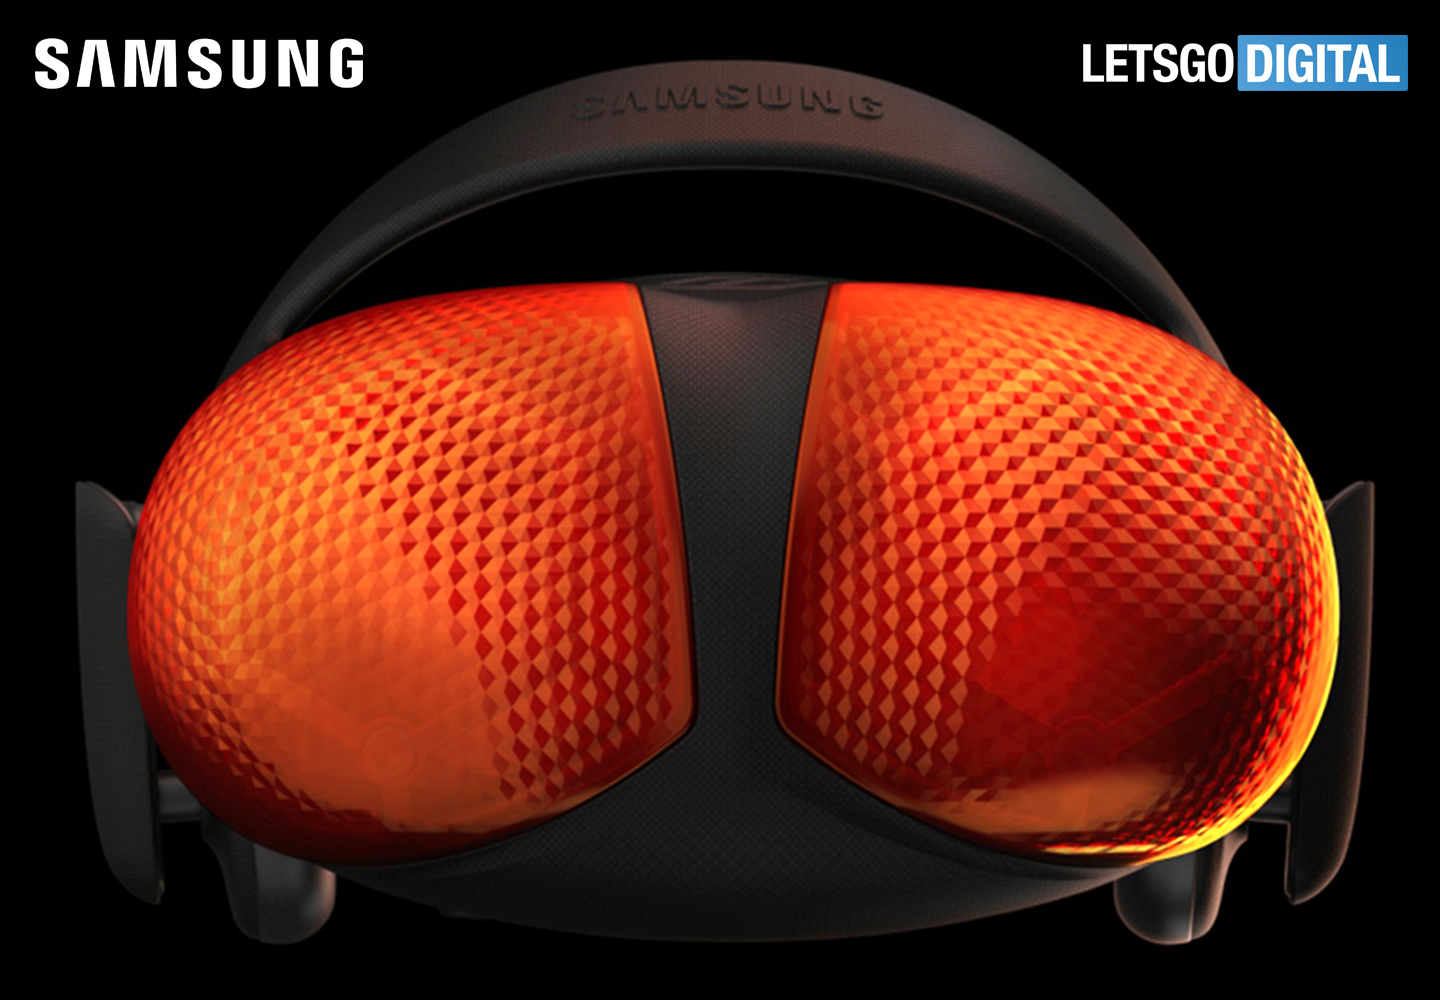 Samsung 2020 VR headset